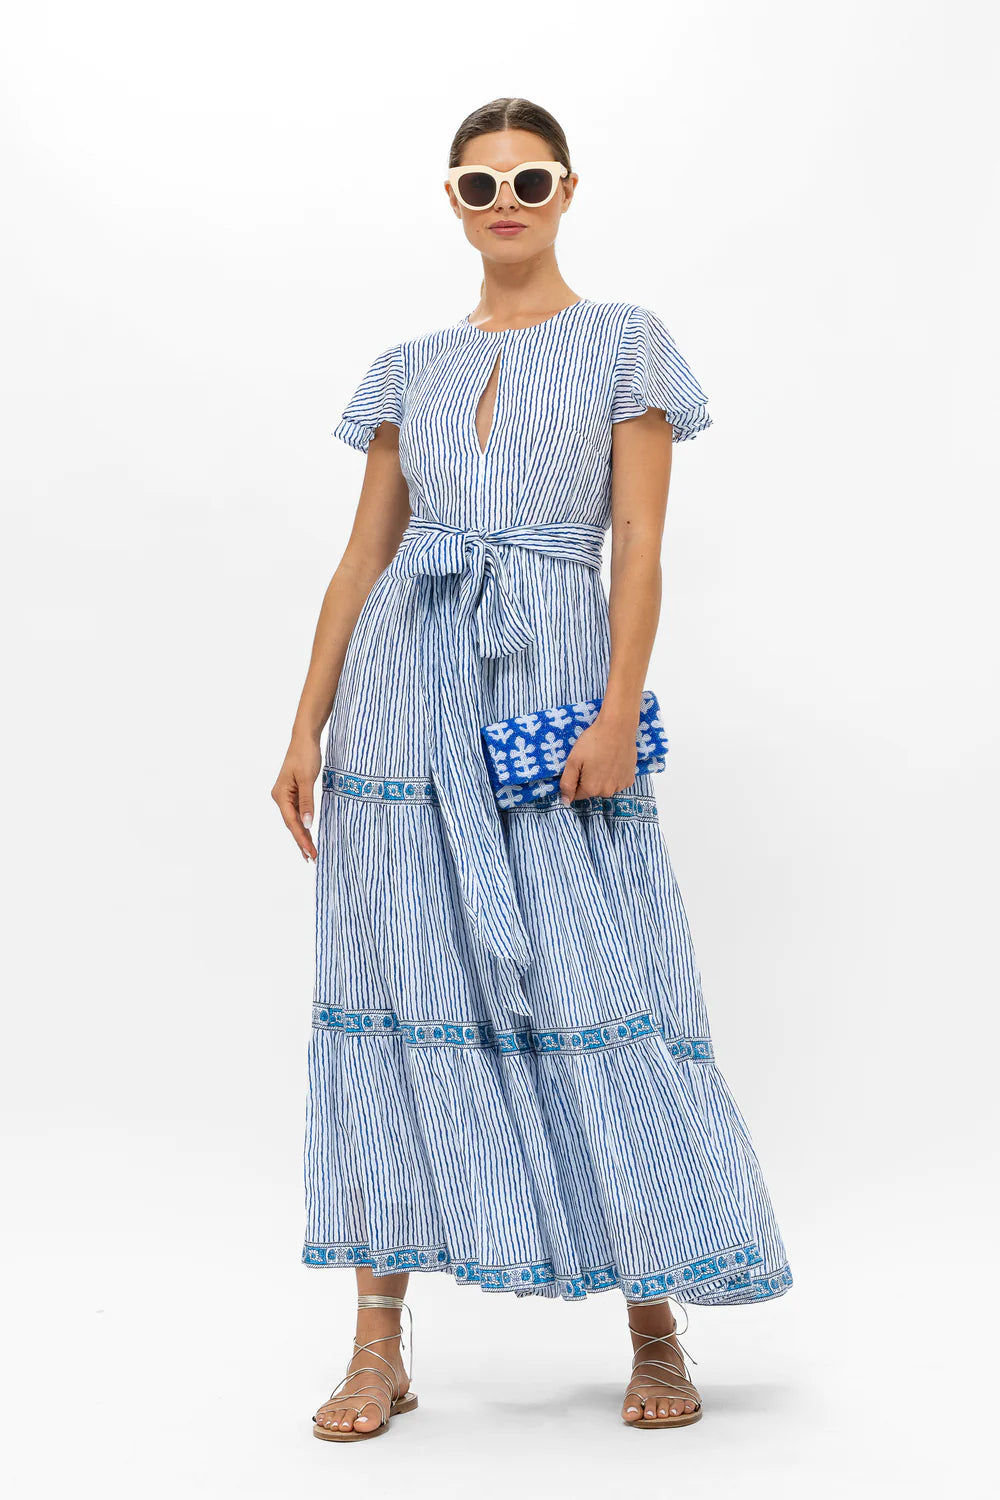 Oliphant Sorrento Blue Stripe Dress